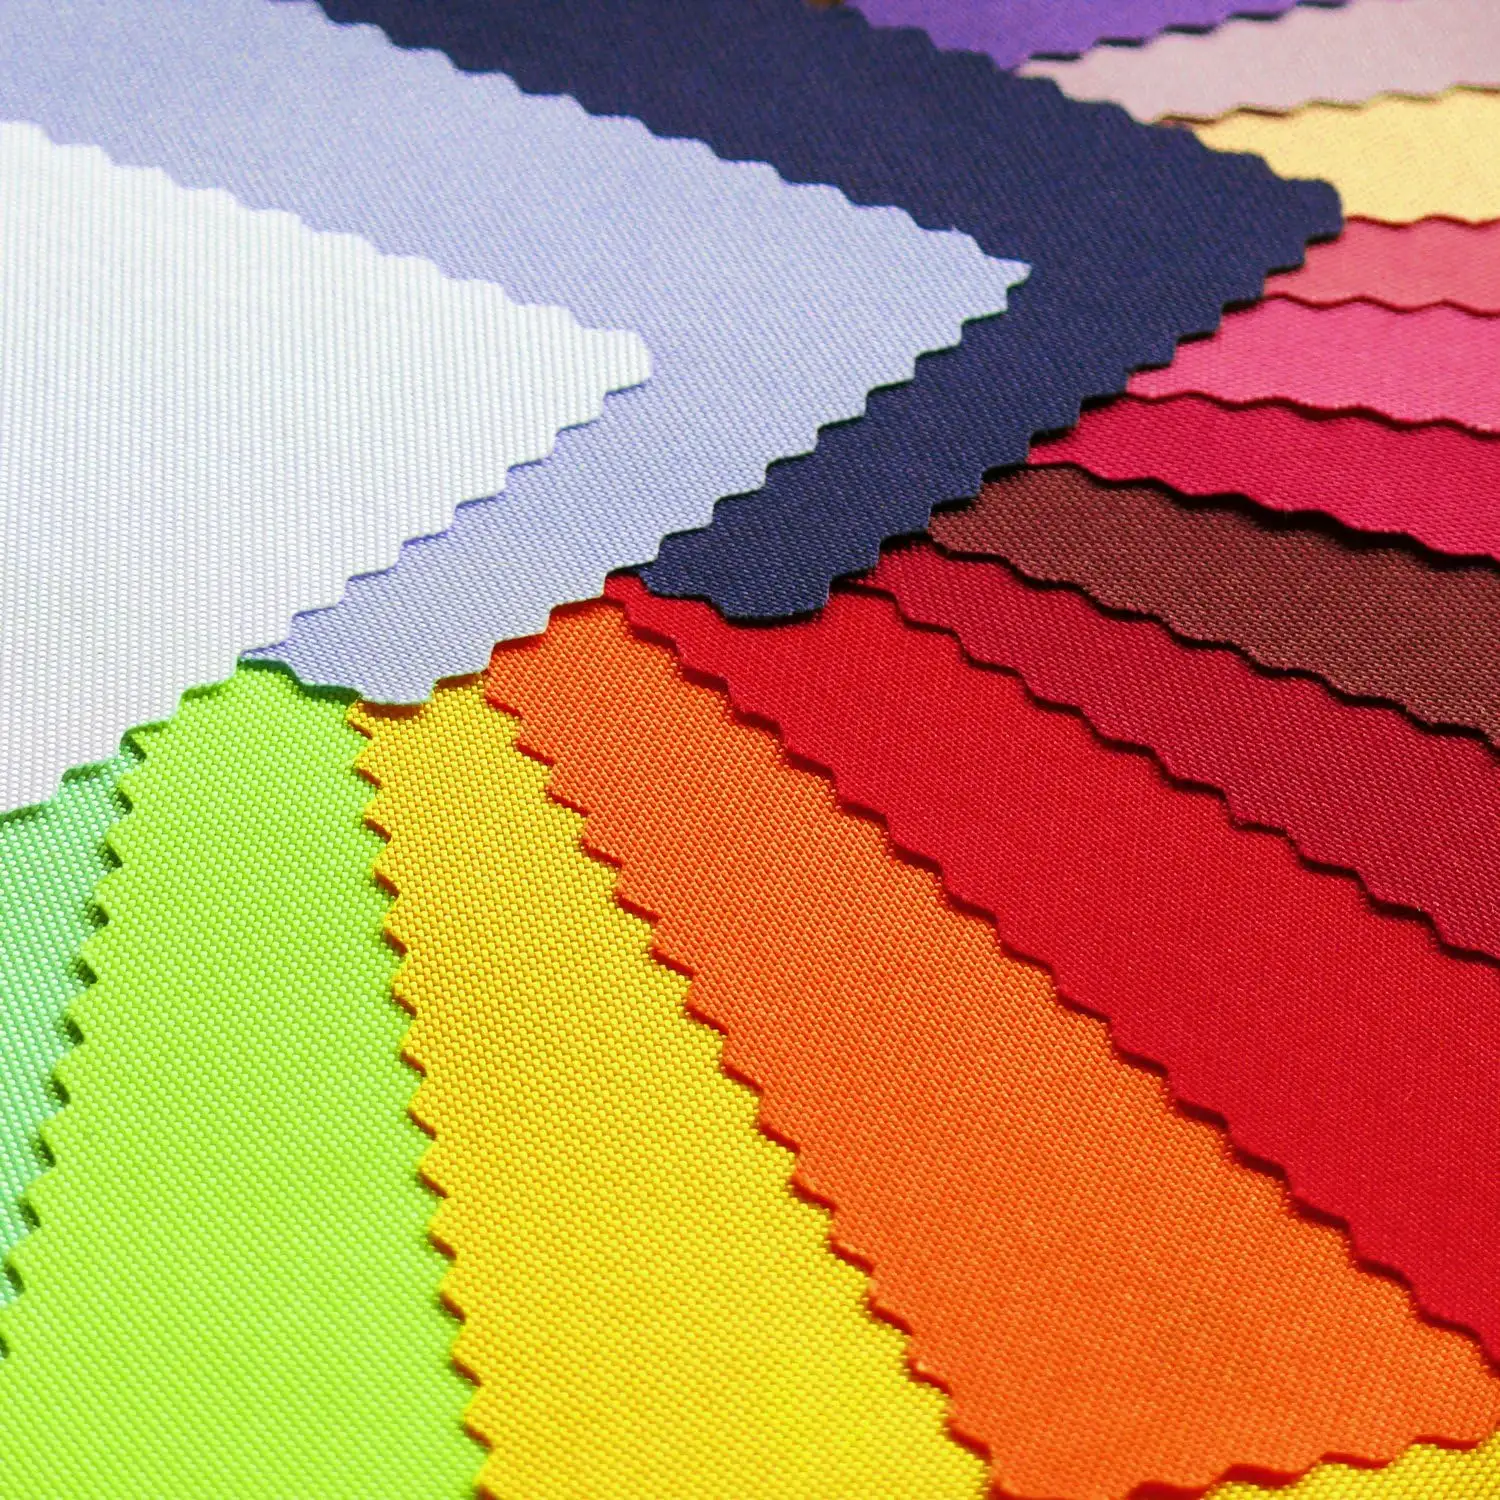 Nuevo estilo 600d telas de poliéster Pvc Pu revestimiento tejido impermeable Ripstop Oxford tela para bolsa de Picnic